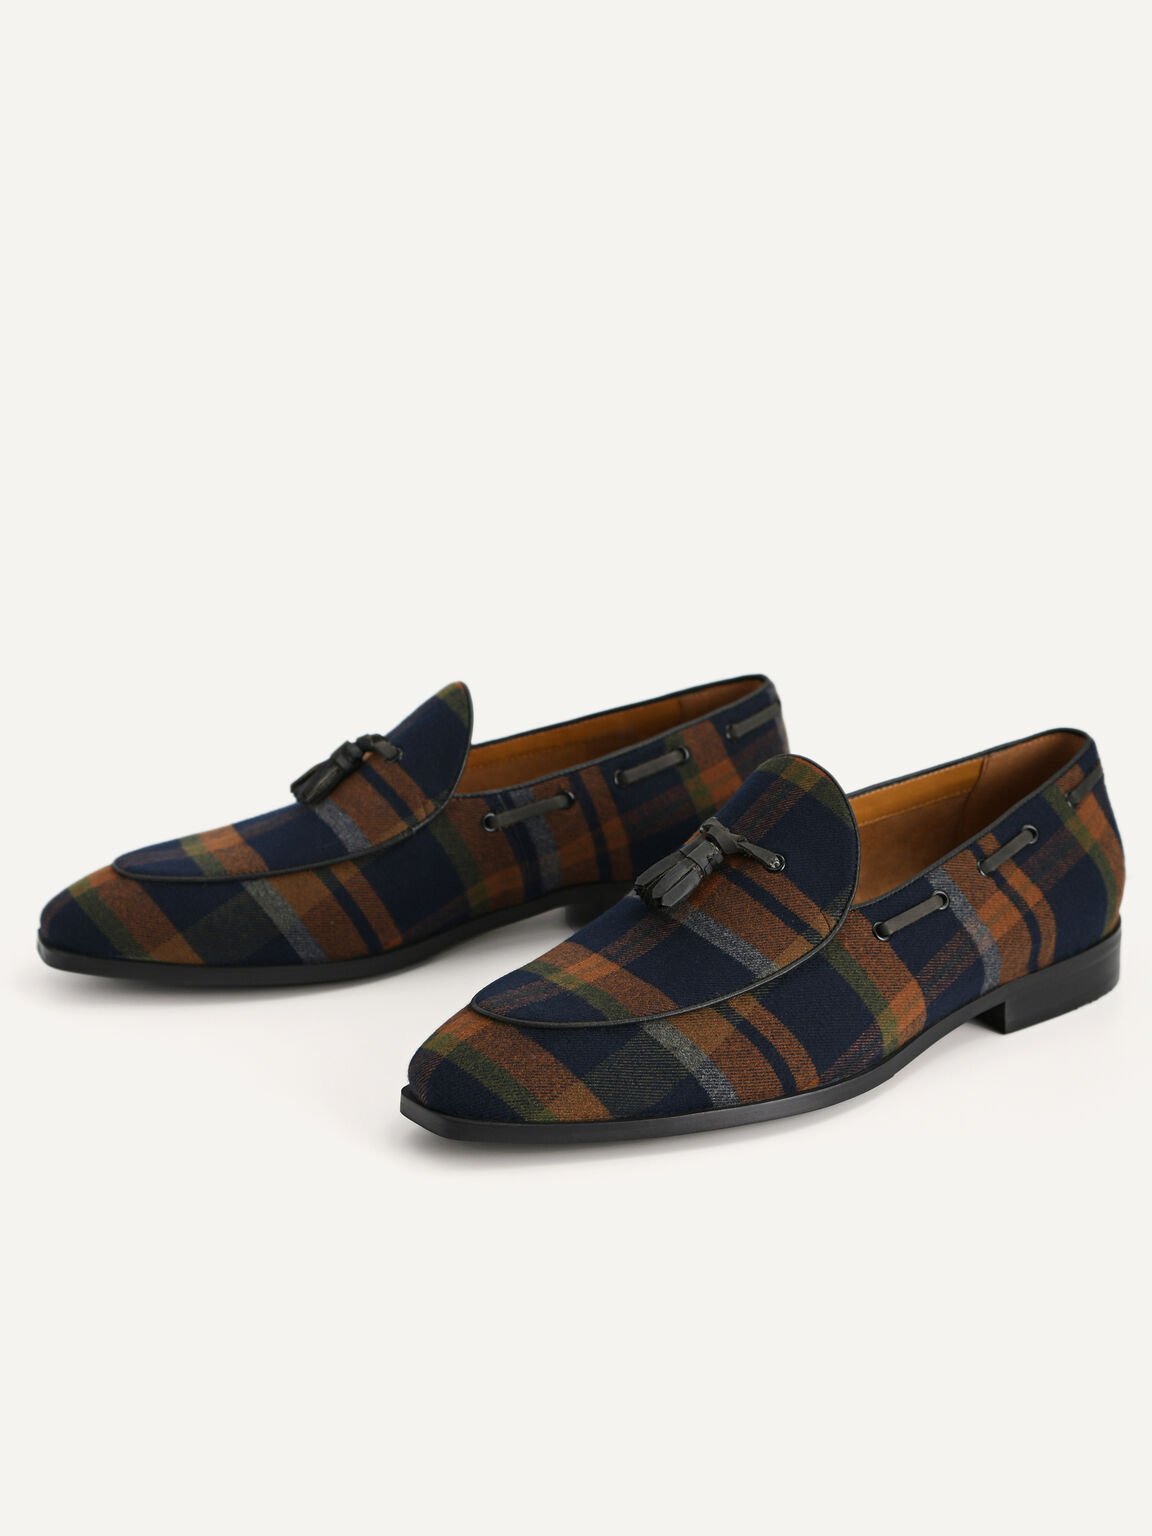 Striped Tasselled Loafers, Multi